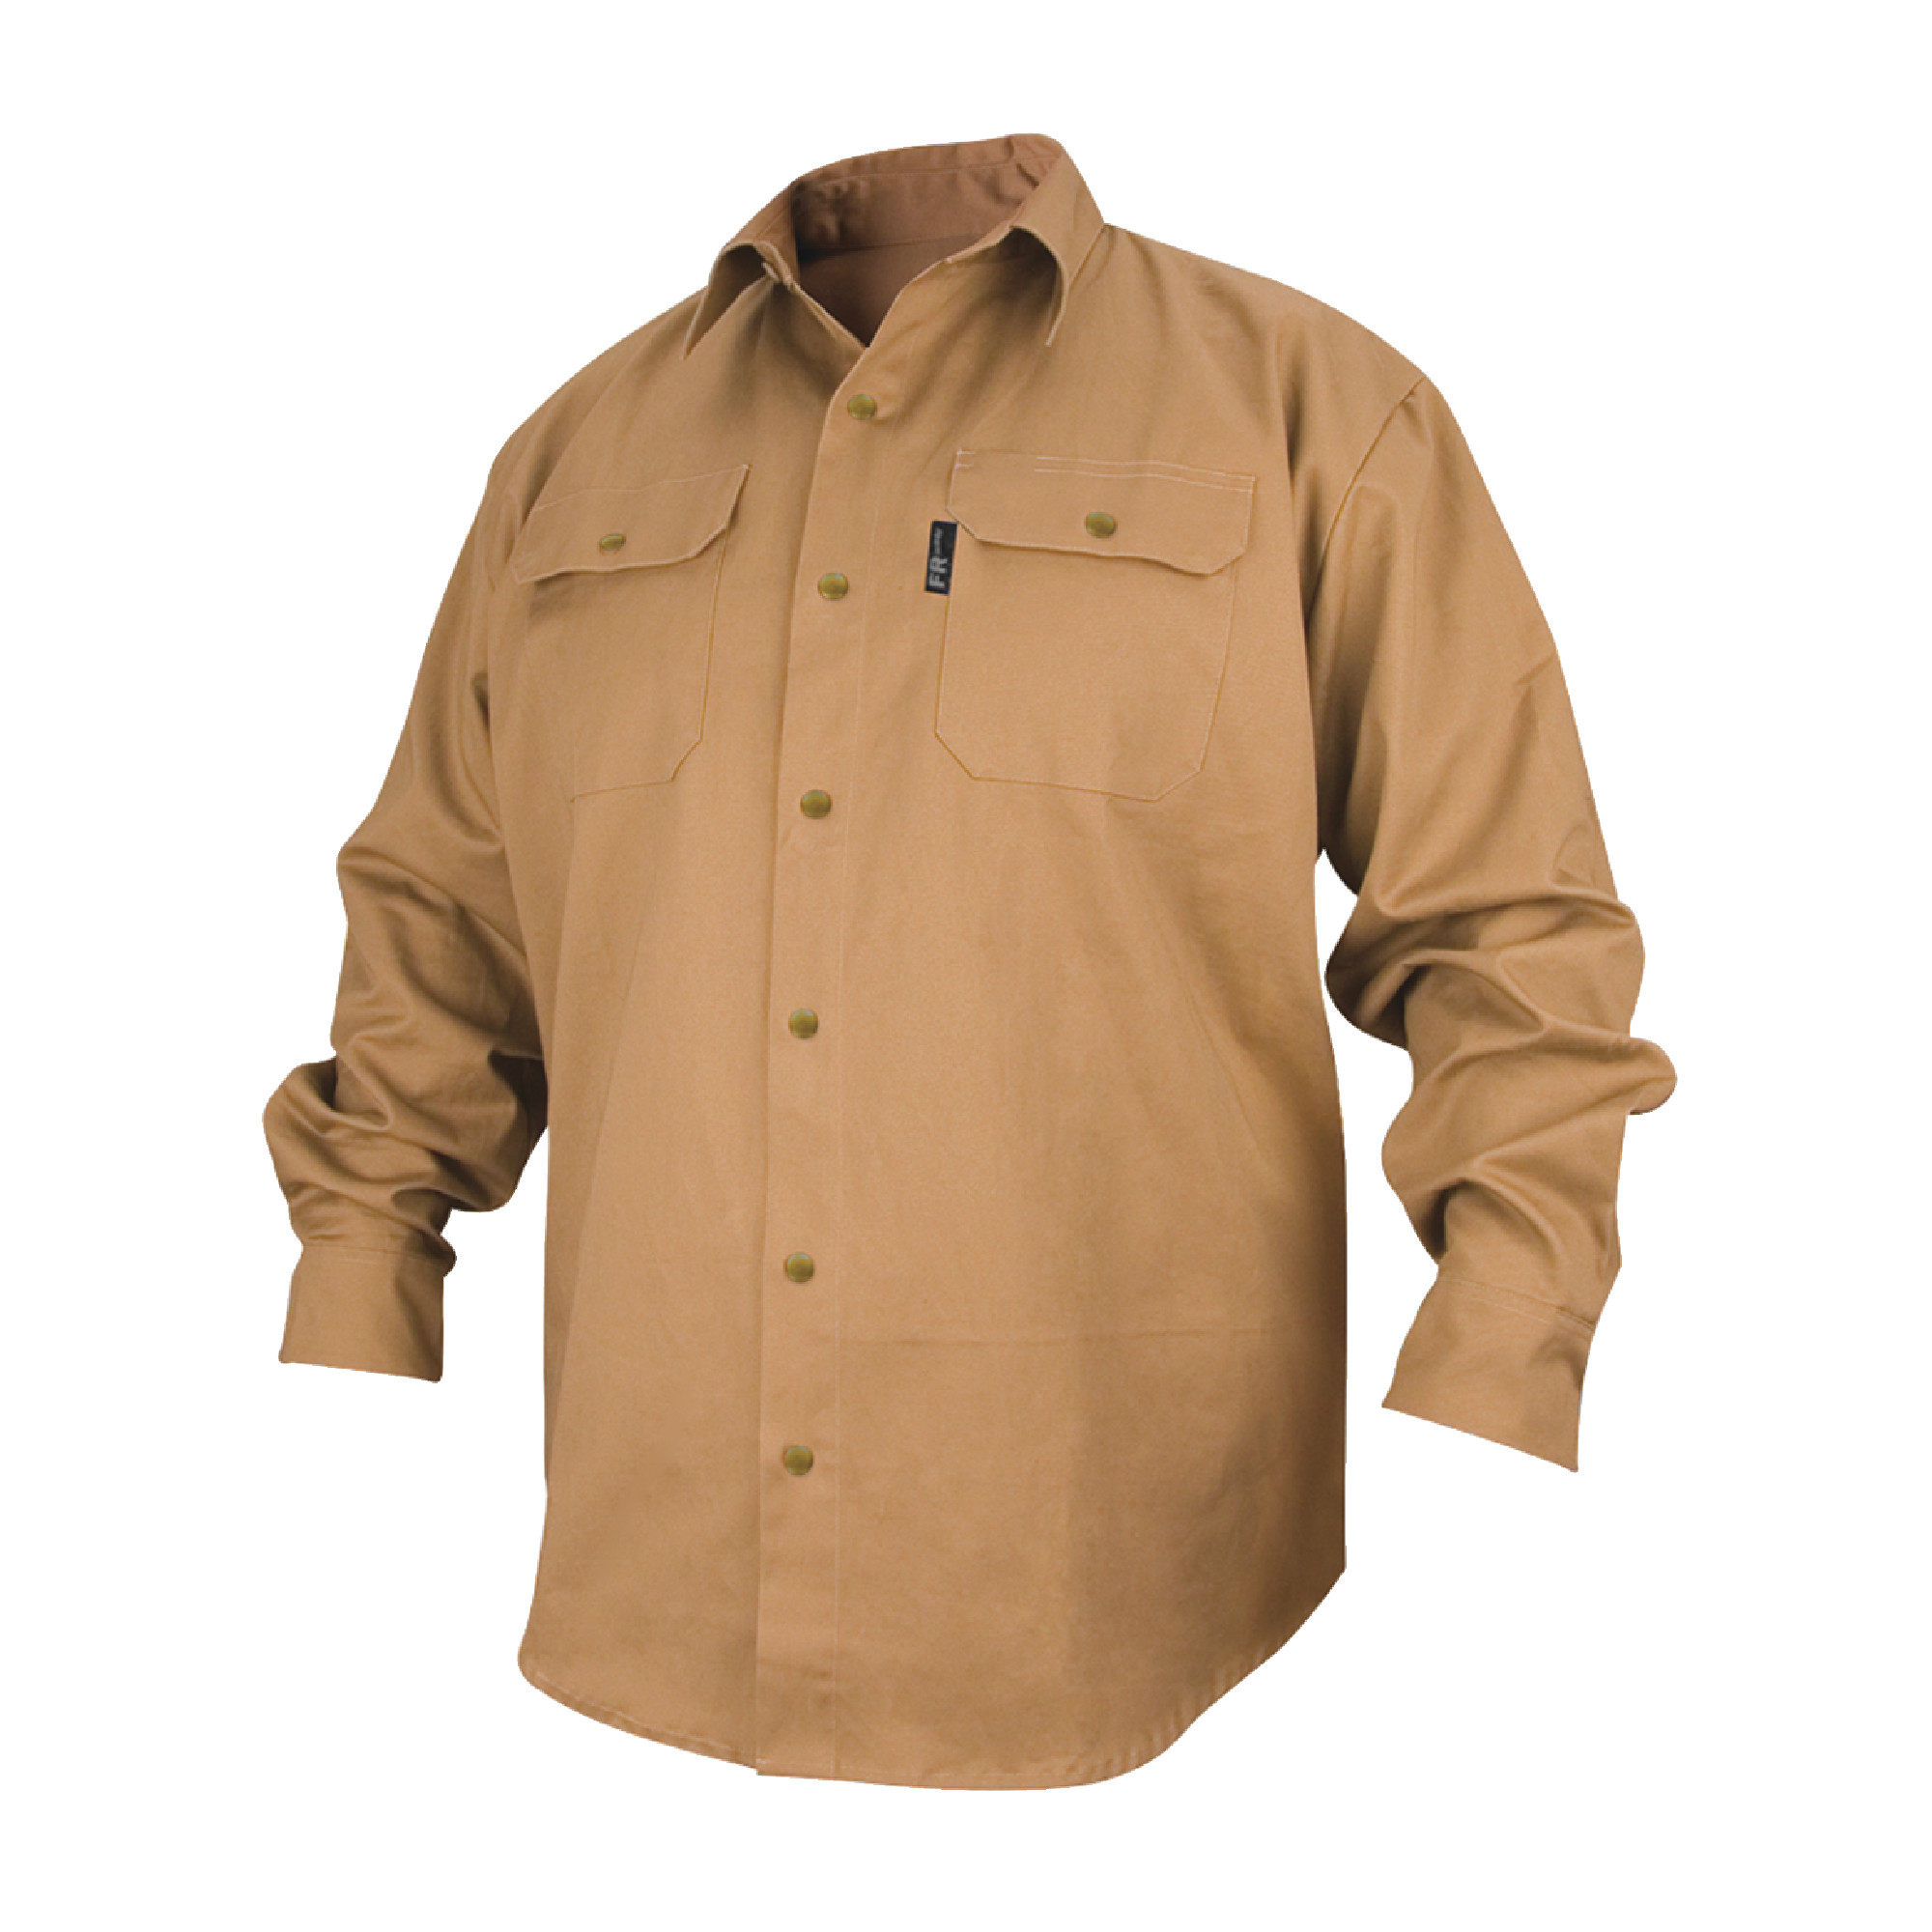 Black Stallion Khaki Fire Resistant Cotton Welding Shirt - Size XXL